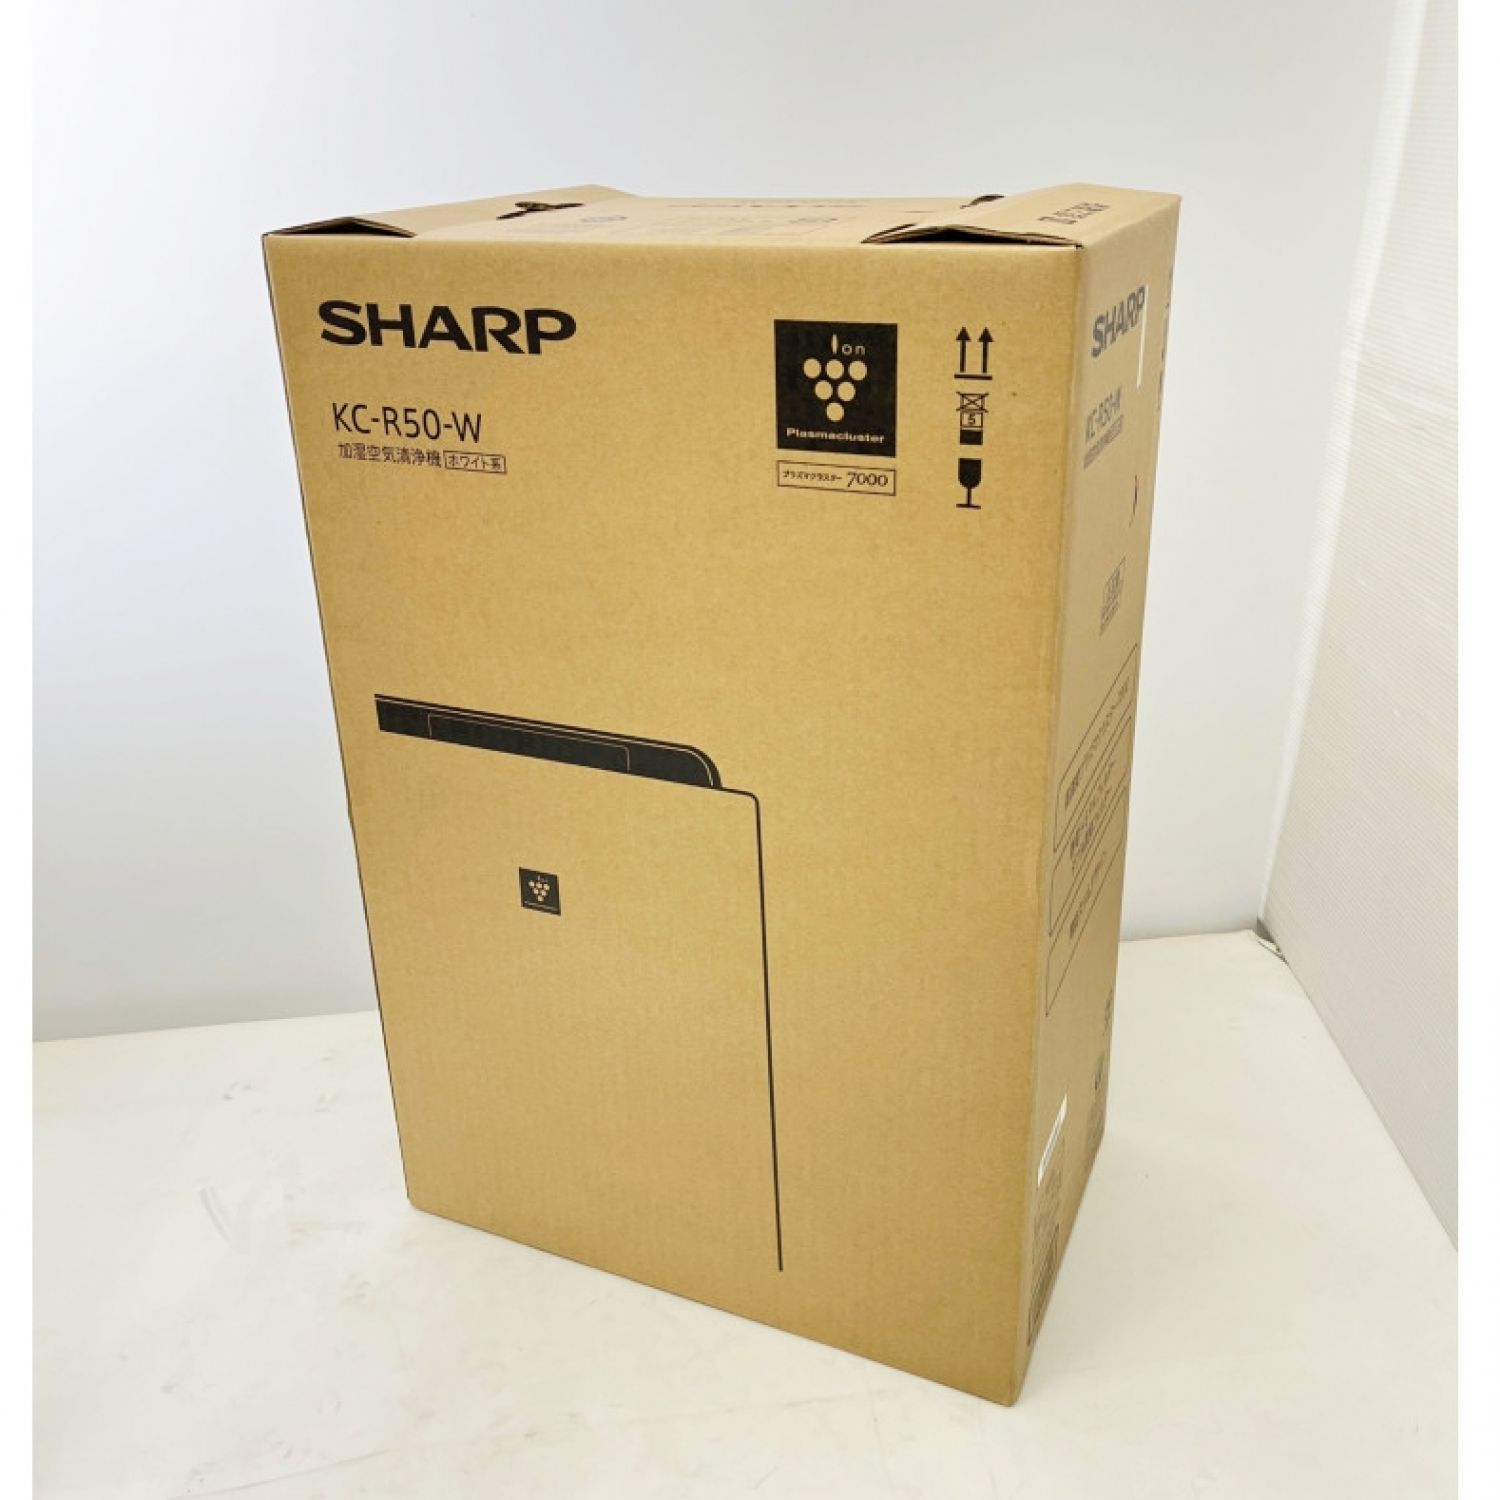 SHARPSHARP KC-R50-W WHITE